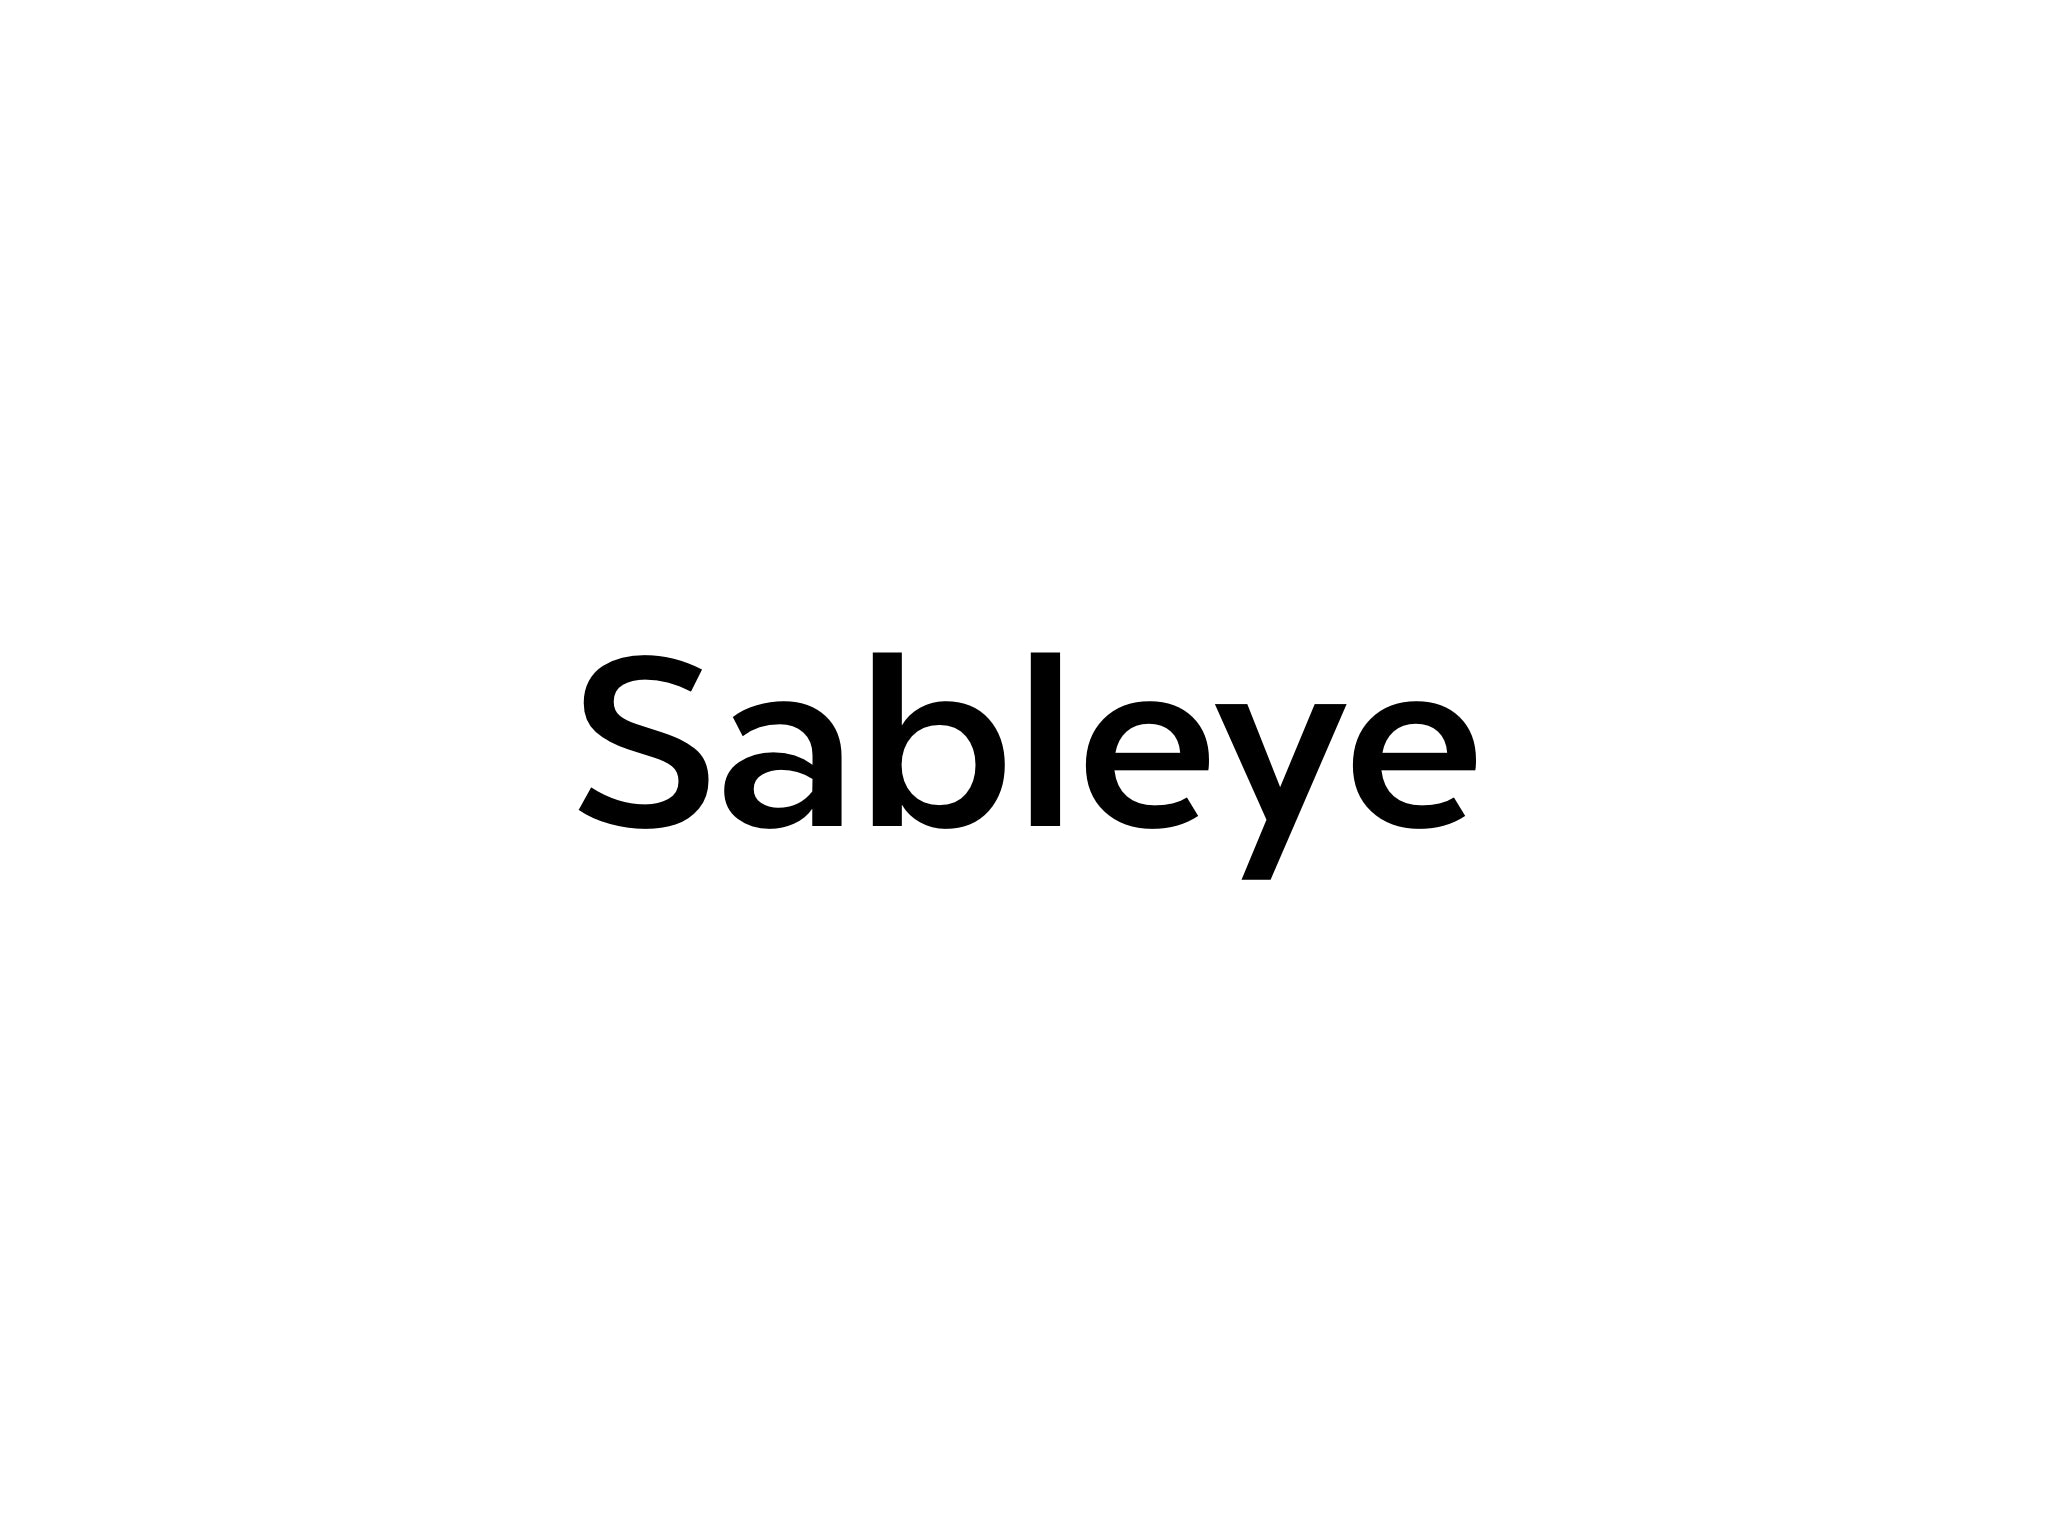 Pre-order Sableye Large Crystal Pokeball